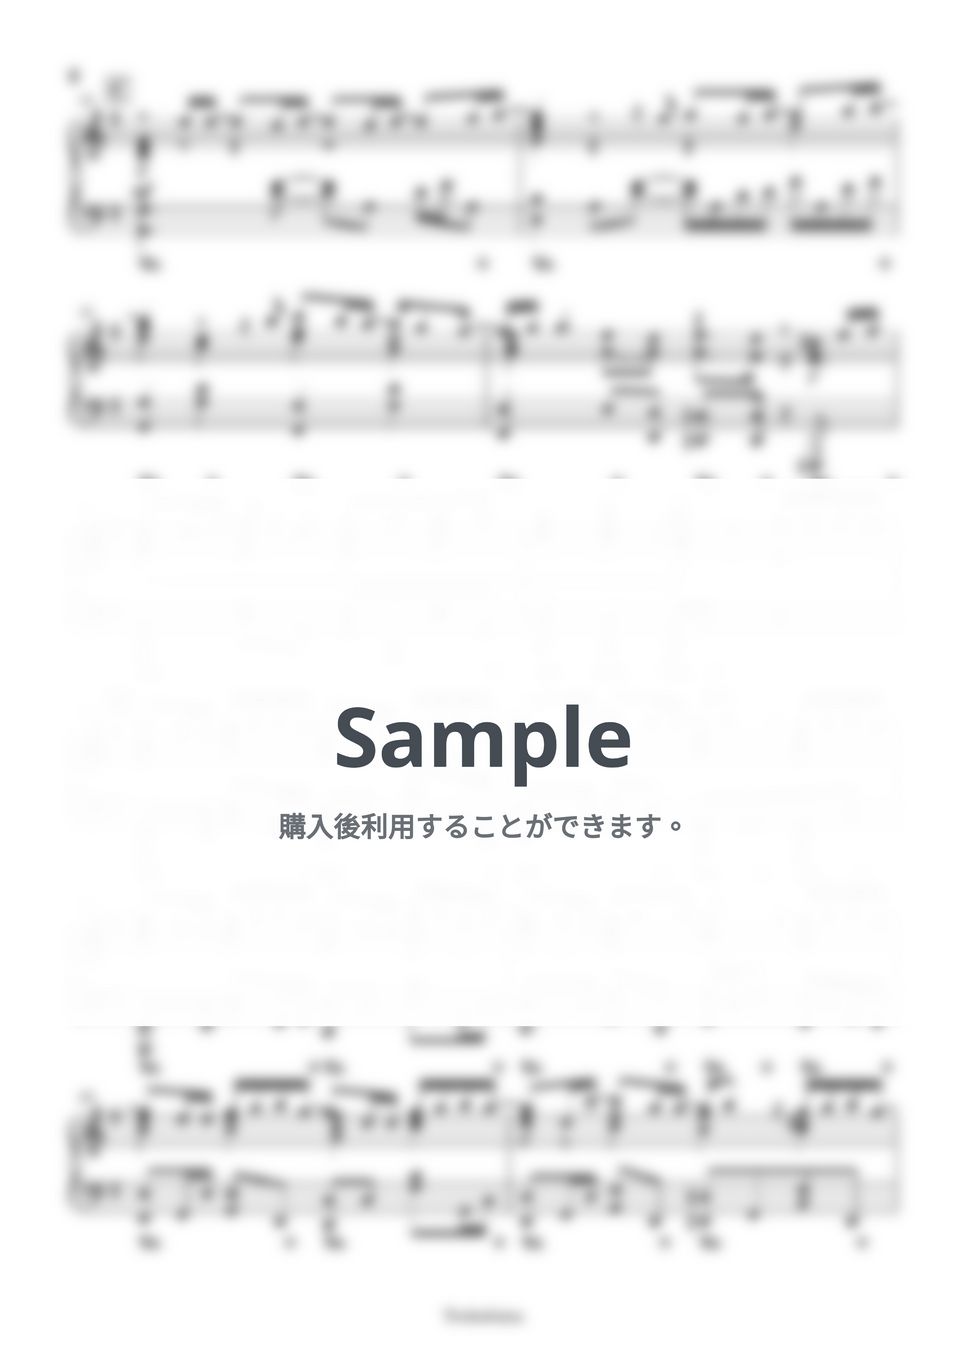 Aimer - 白色蜉蝣 (ドラマ『大奥Season2』主題歌) by Trohishima